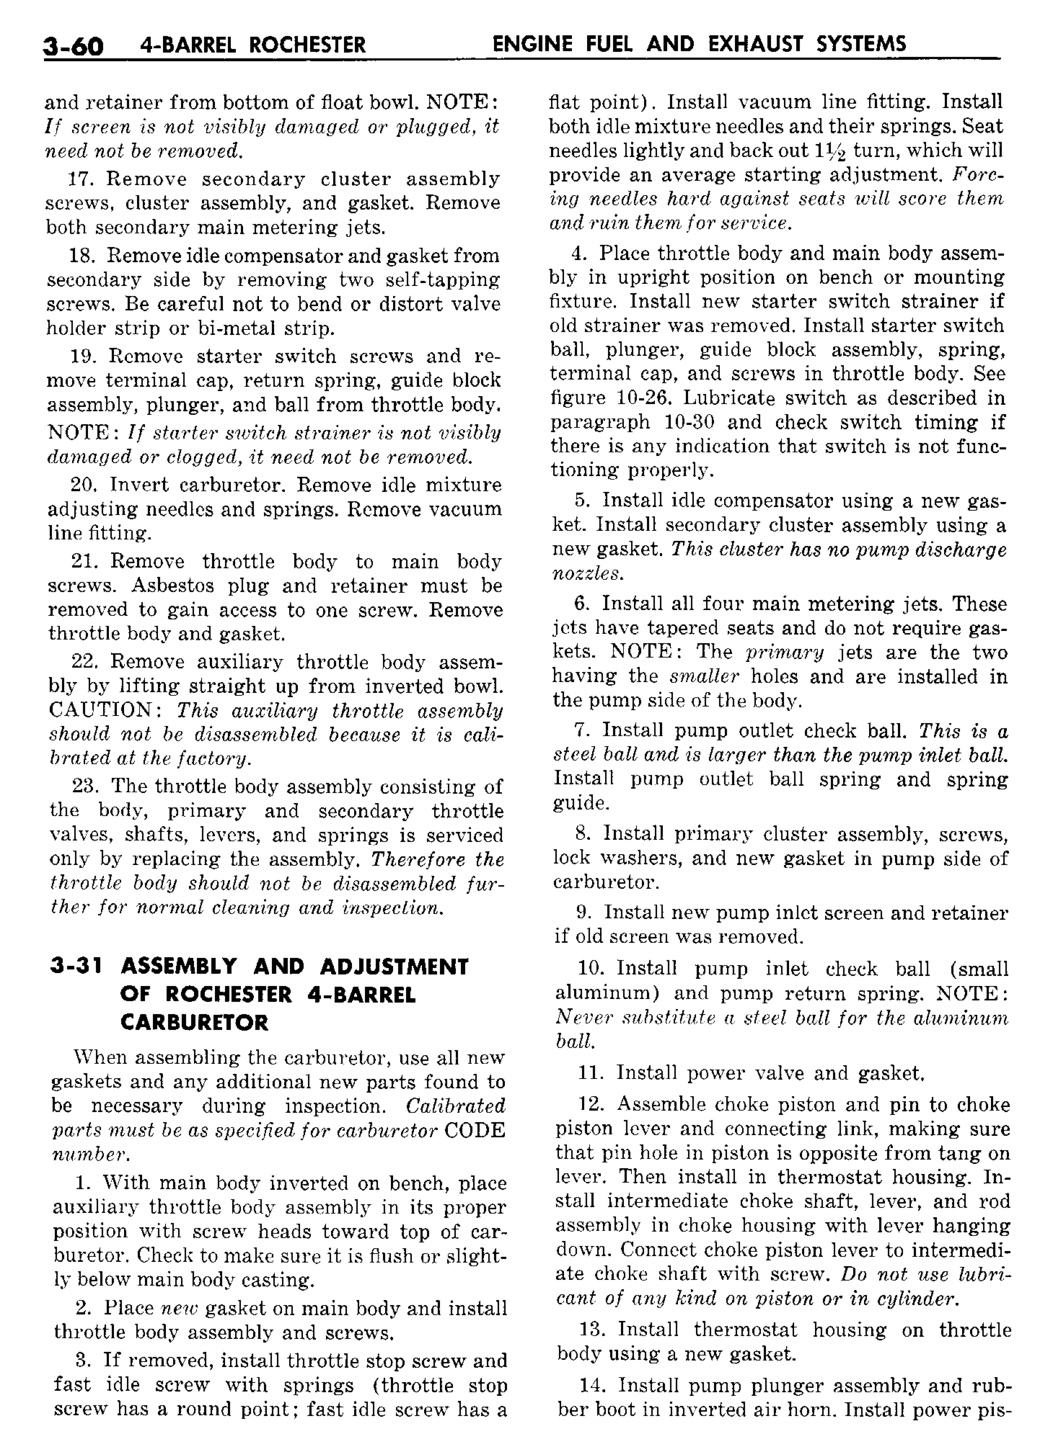 n_04 1960 Buick Shop Manual - Engine Fuel & Exhaust-060-060.jpg